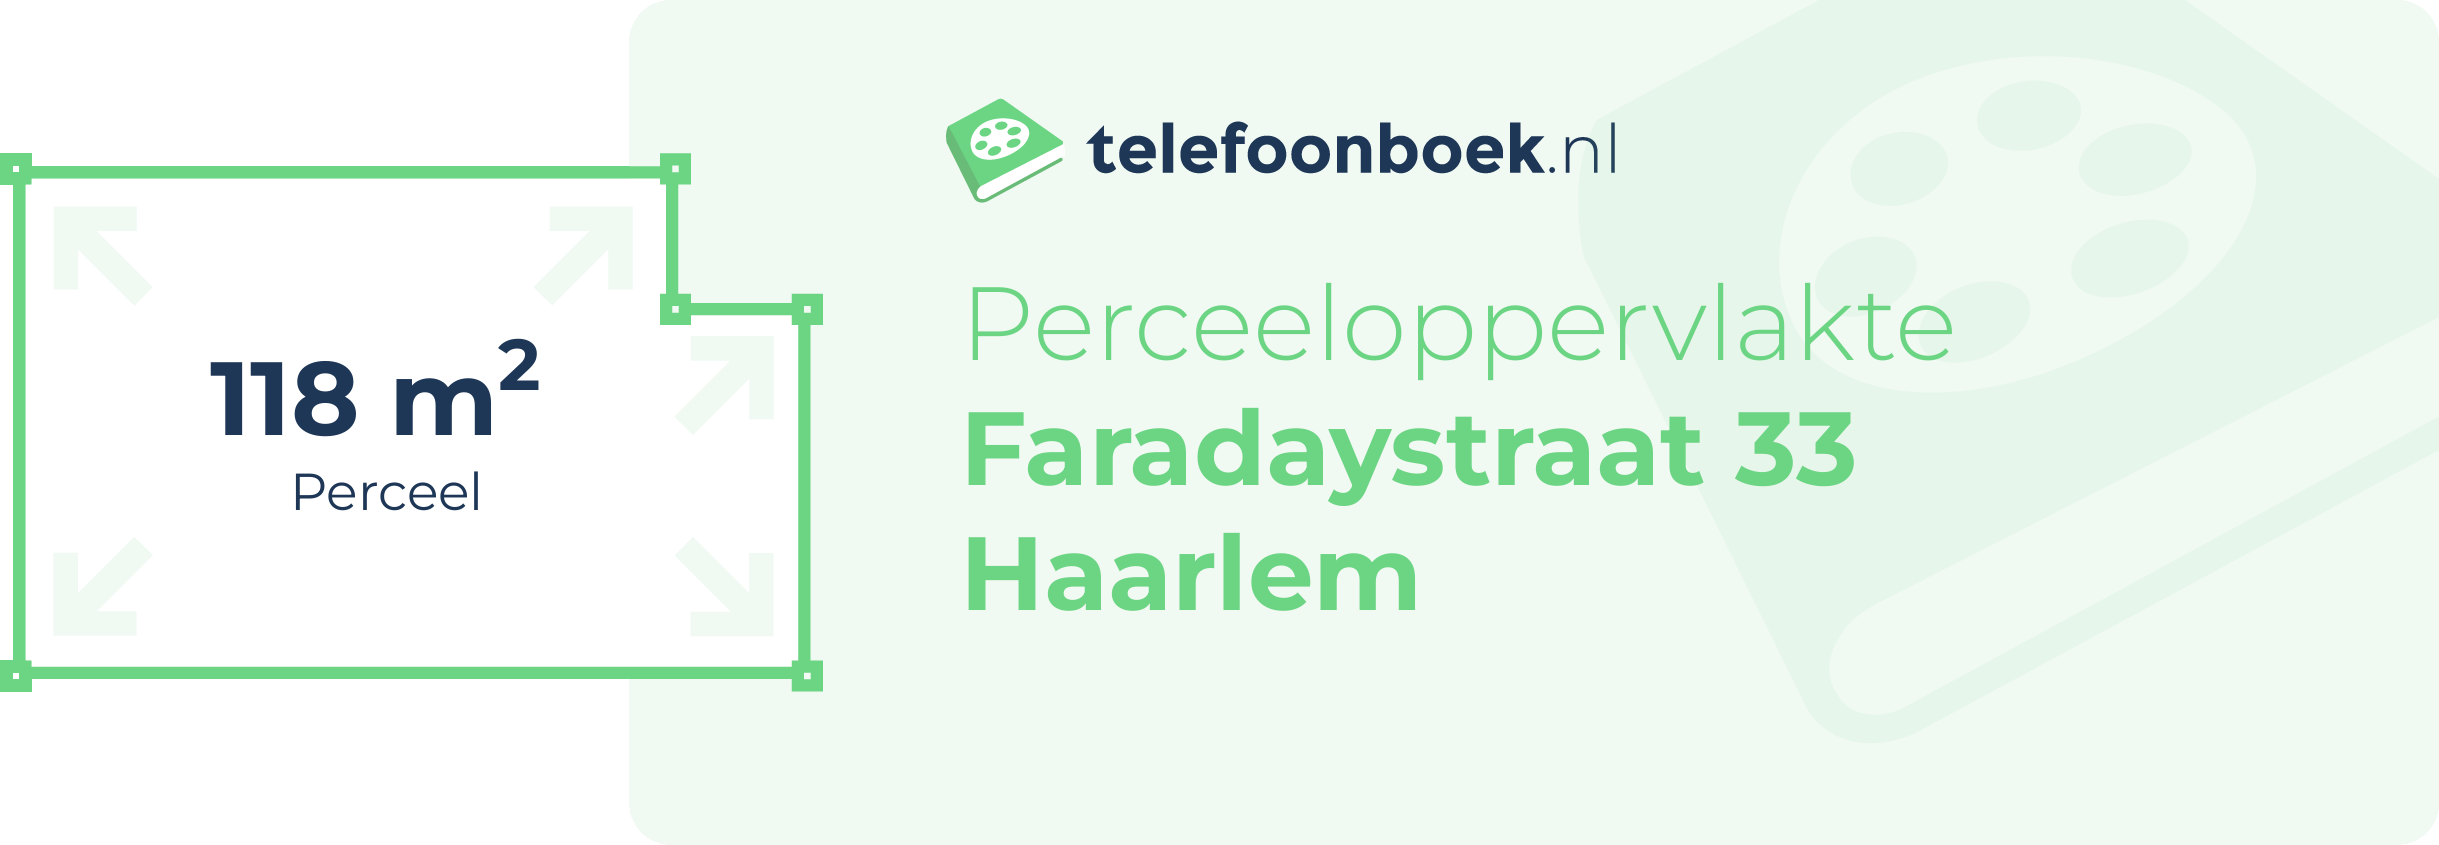 Perceeloppervlakte Faradaystraat 33 Haarlem